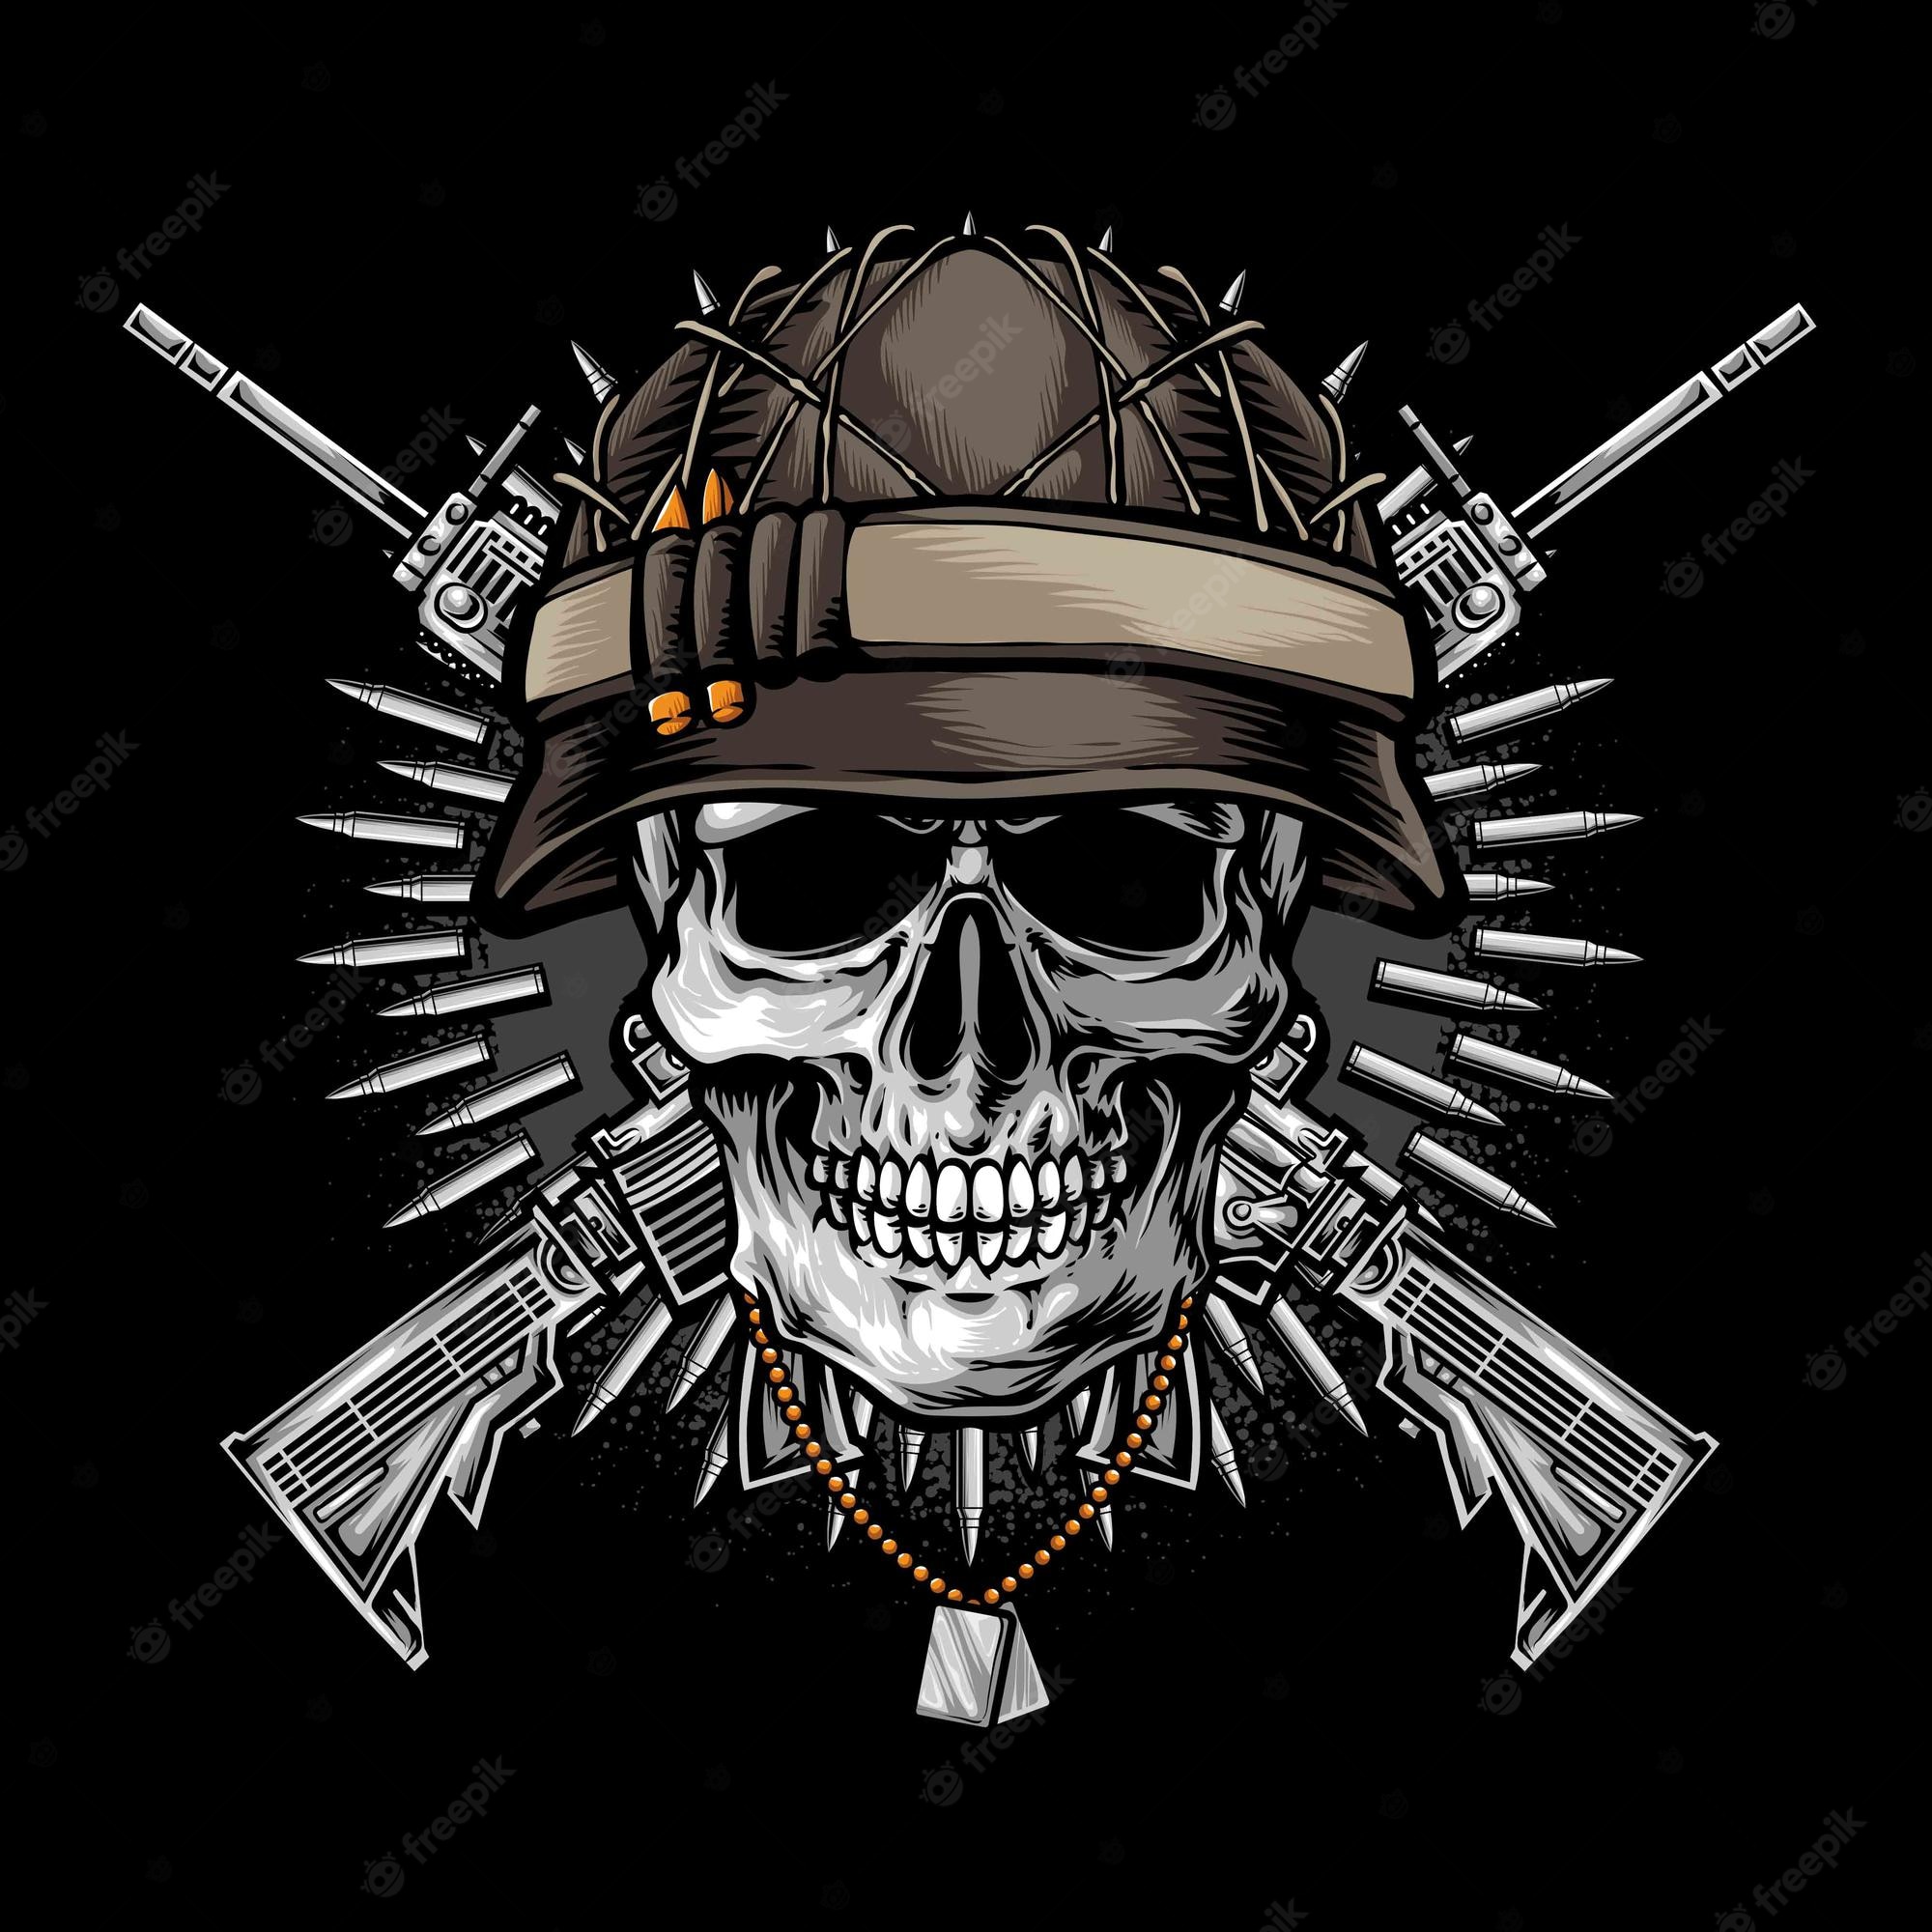 Military skull Image. Free Vectors, & PSD